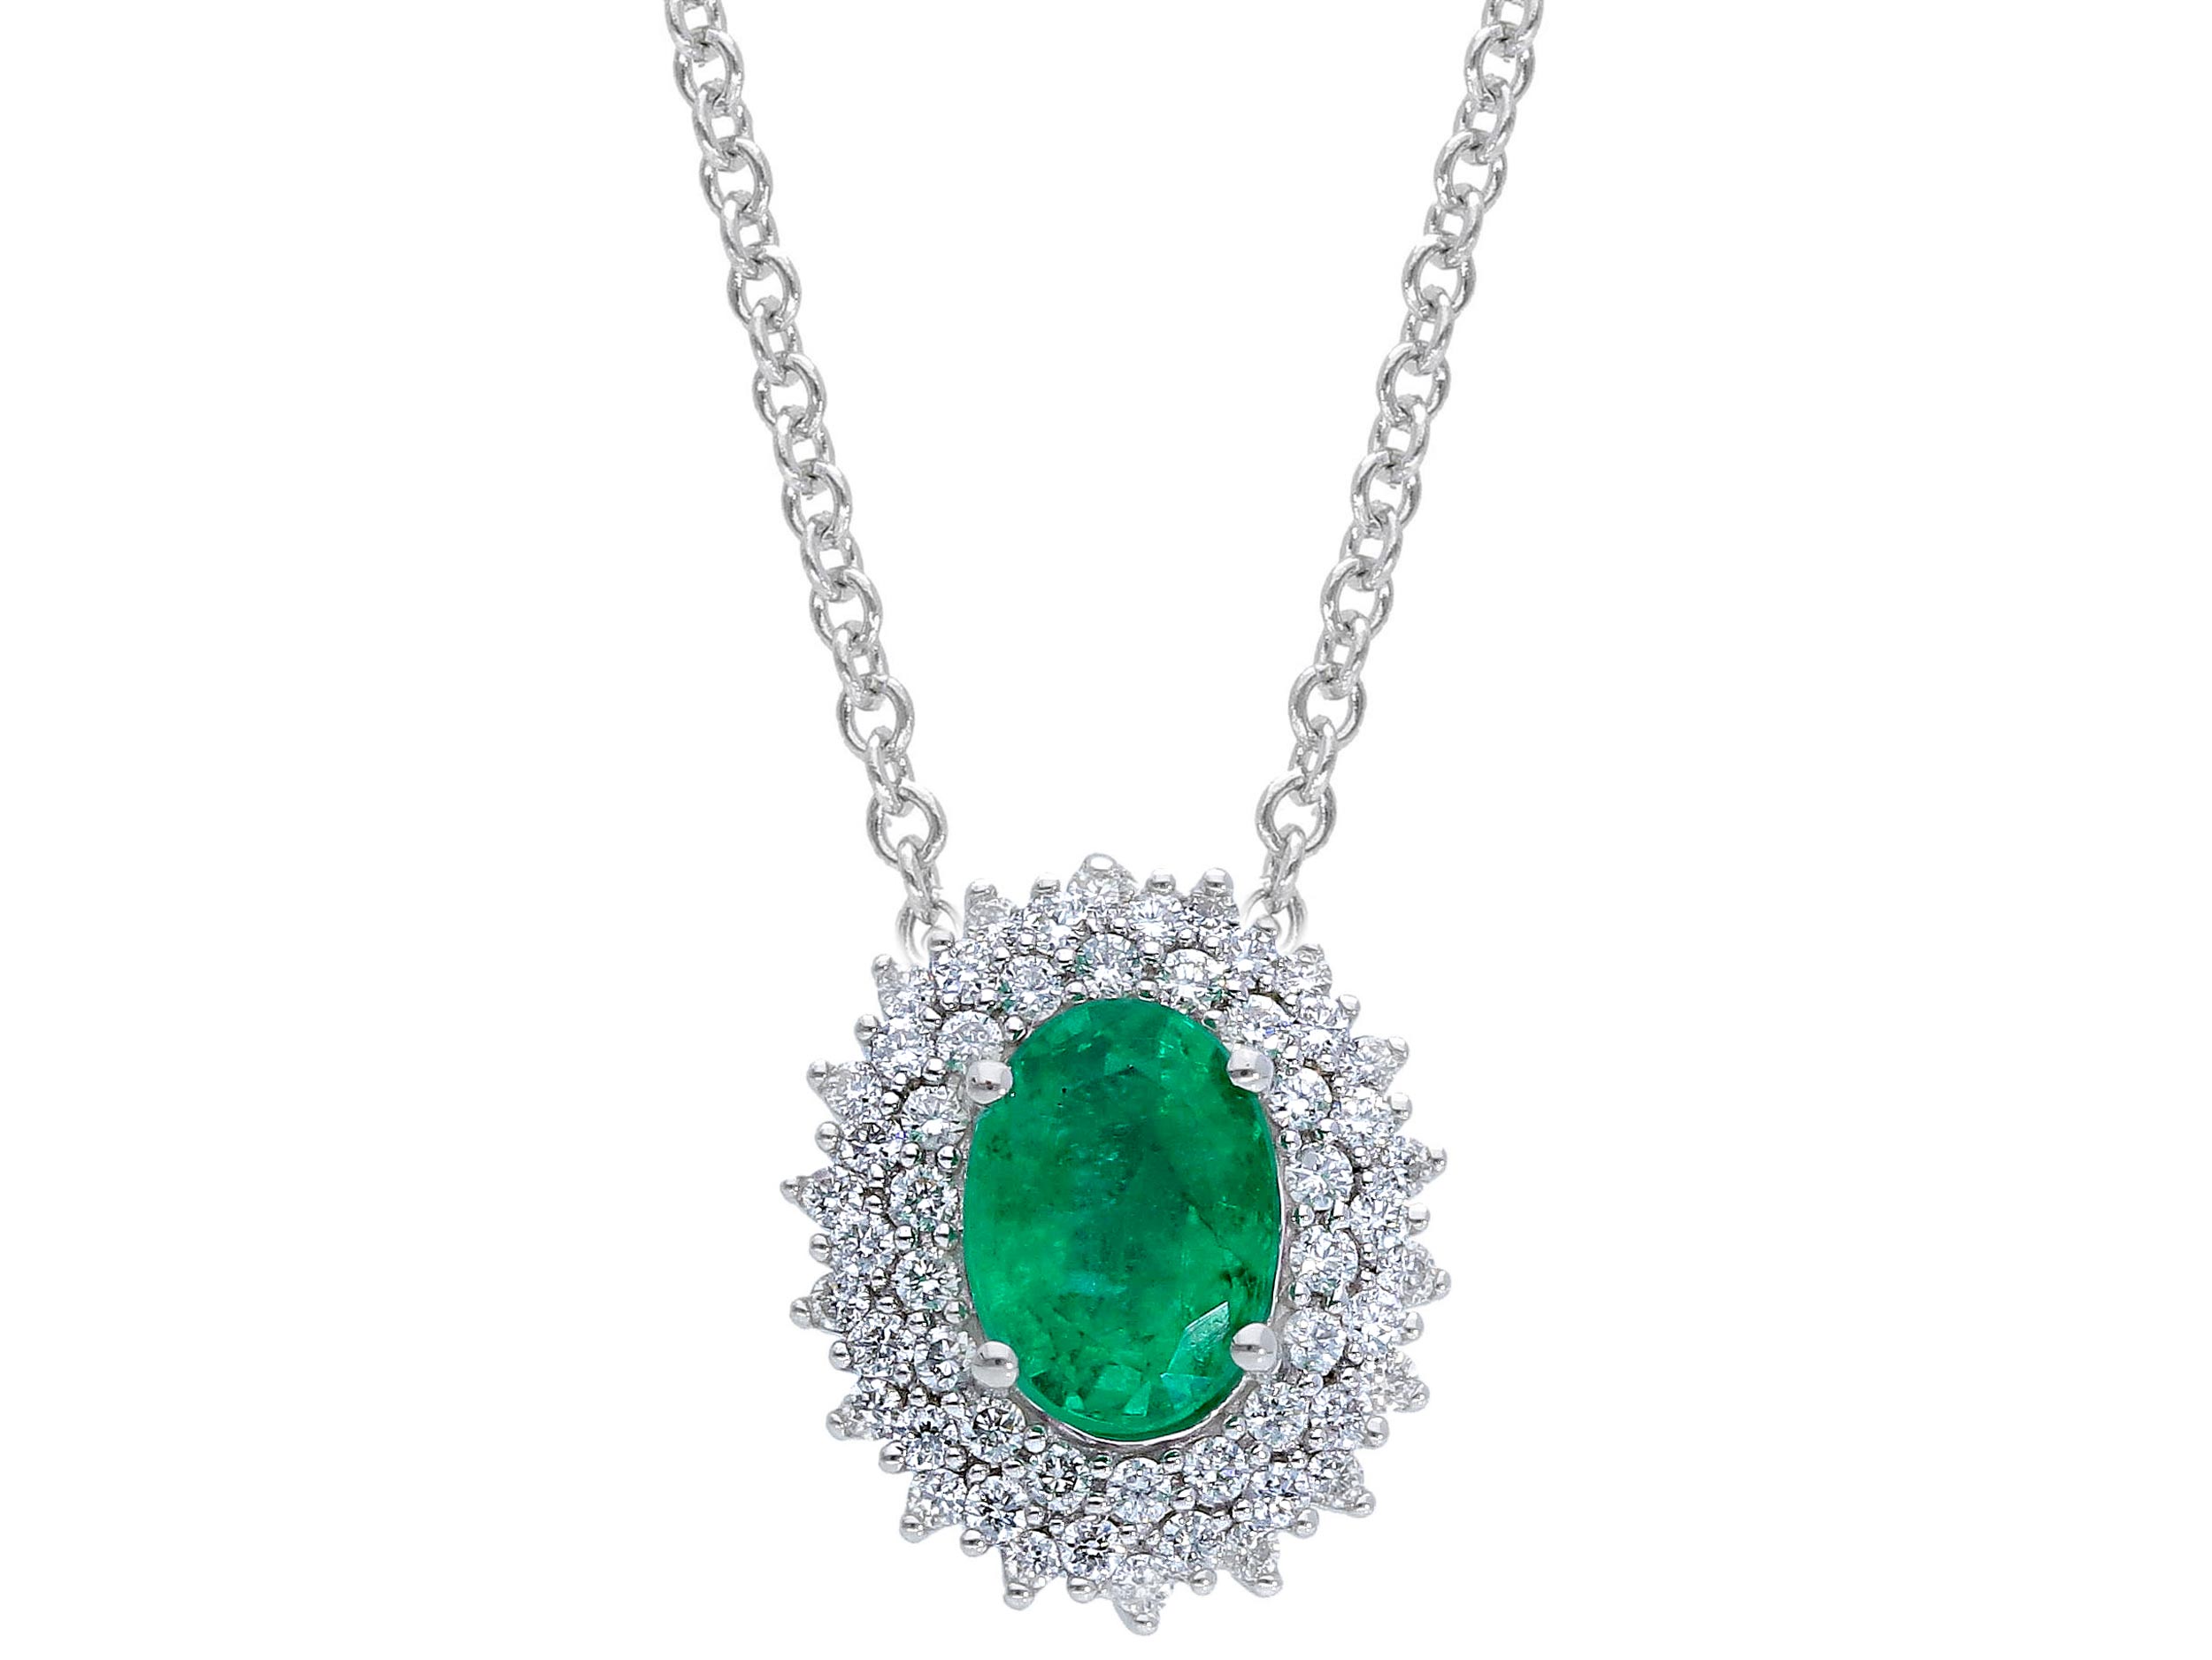 Gold and diamond emerald pendant item code 254179